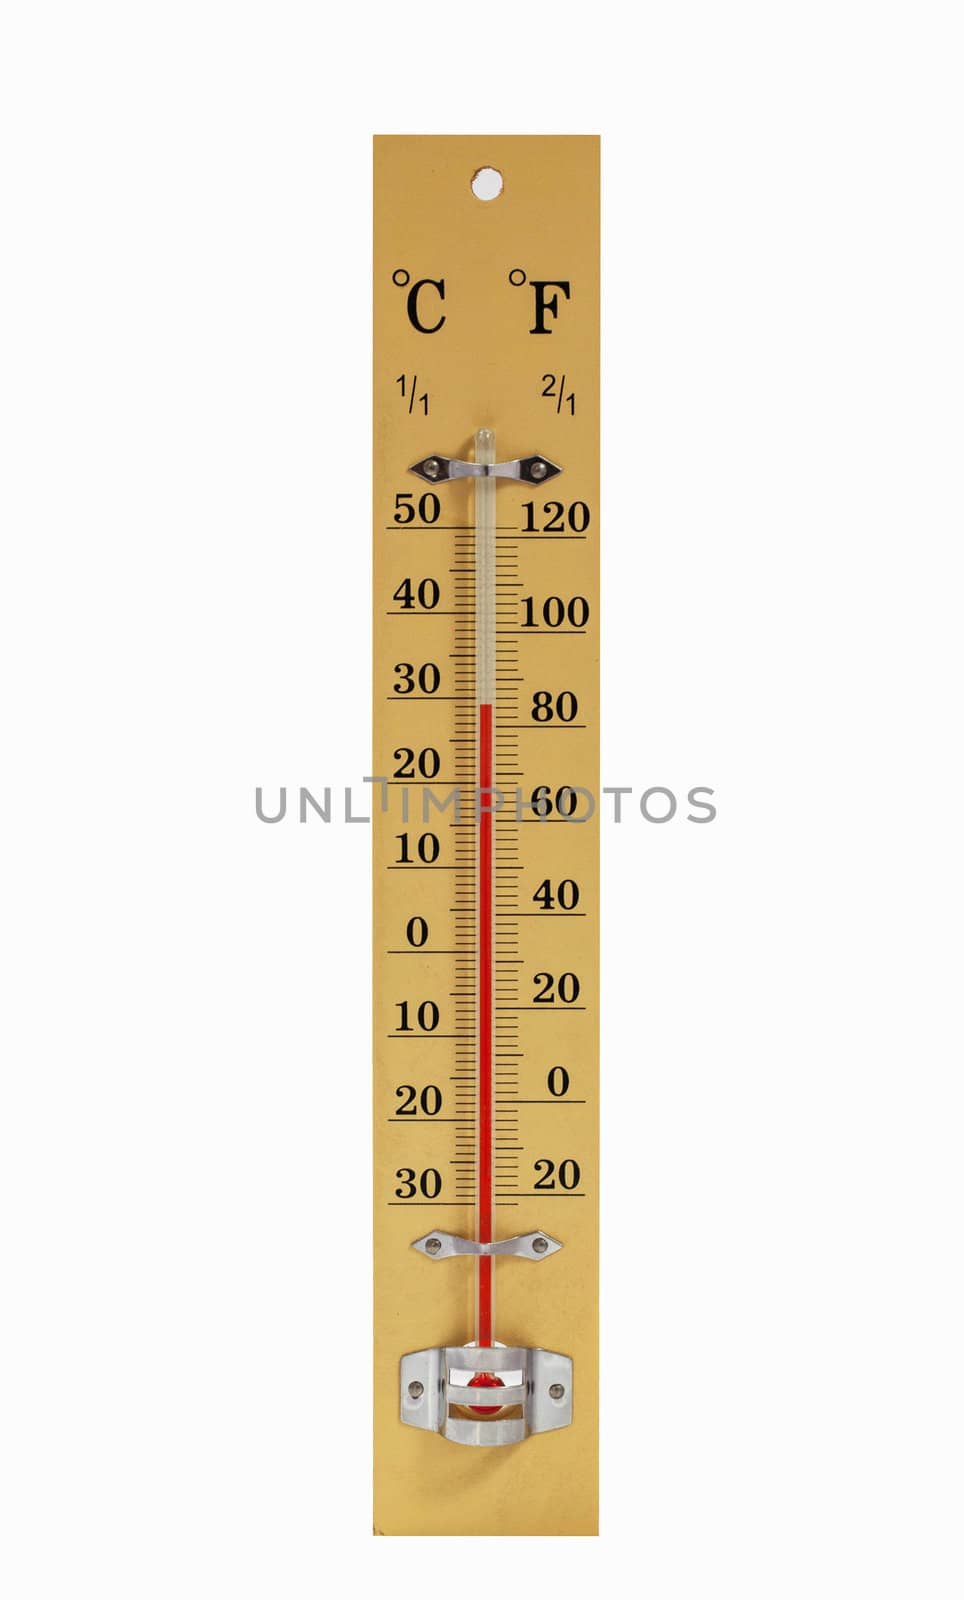 Mercury thermometer. by thanatip